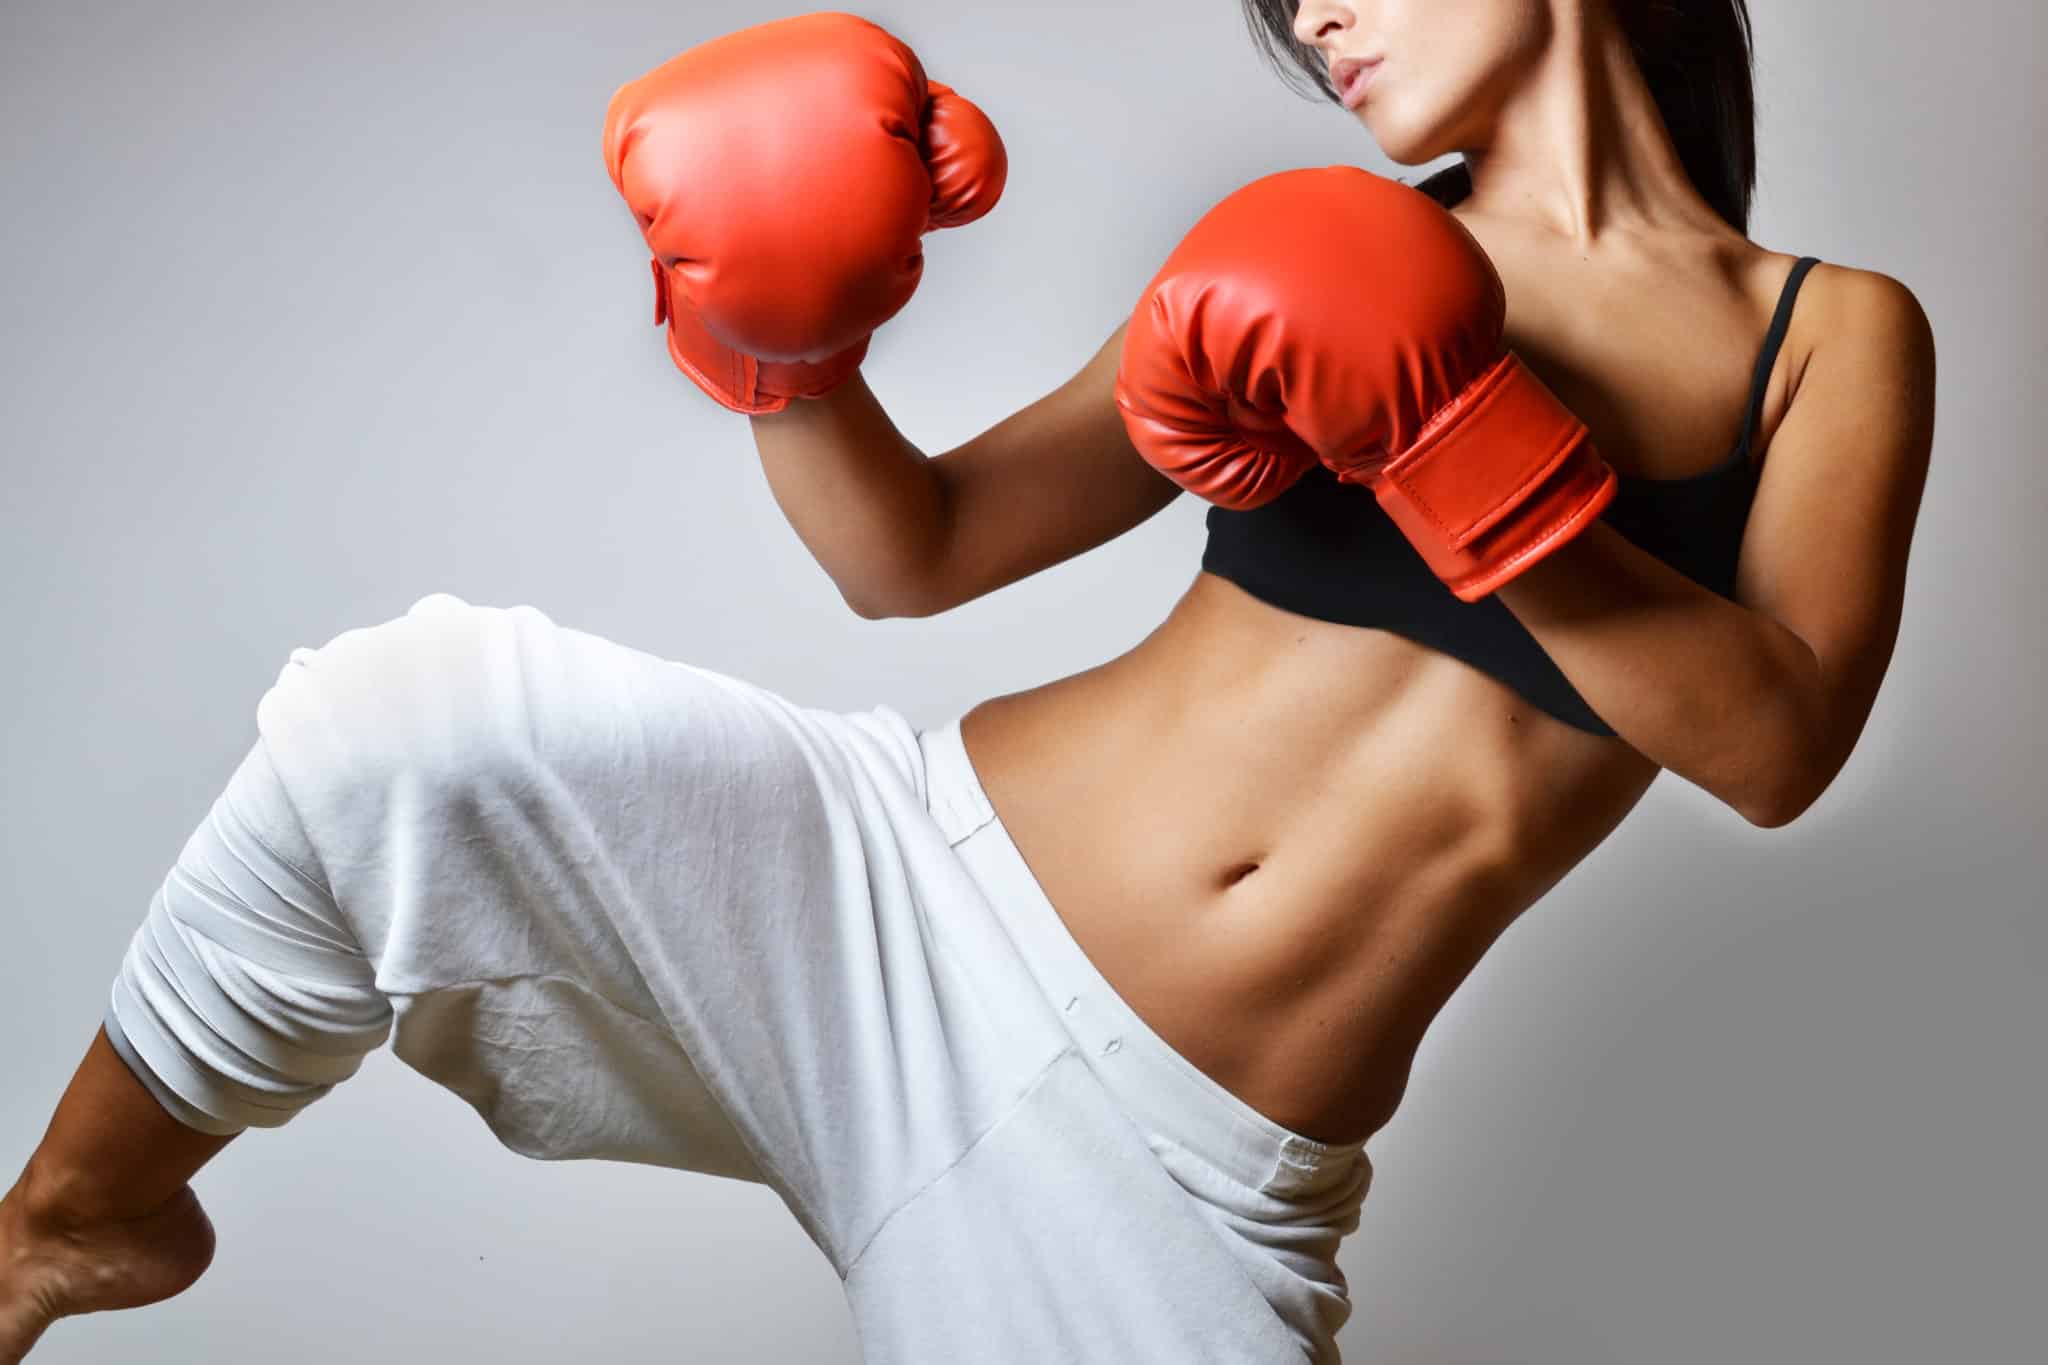 Woman kickboxing